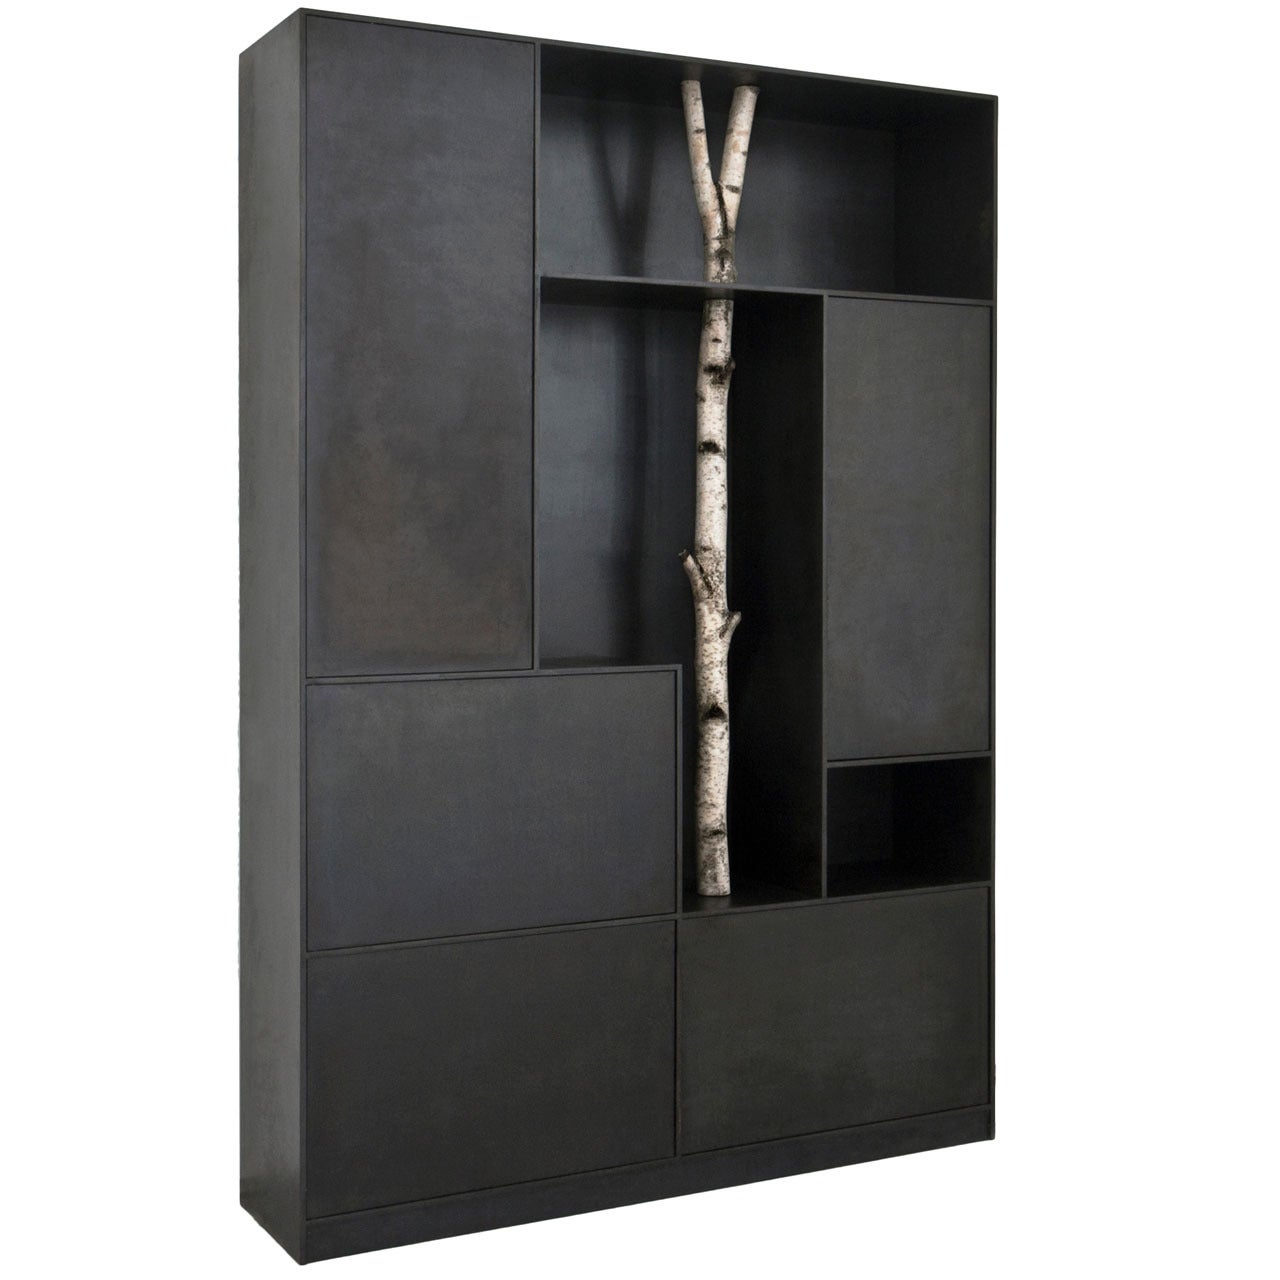 Andrea Branzi, Tree 8, Cabinet, Birch Wood, Patinated Aluminum, 2010